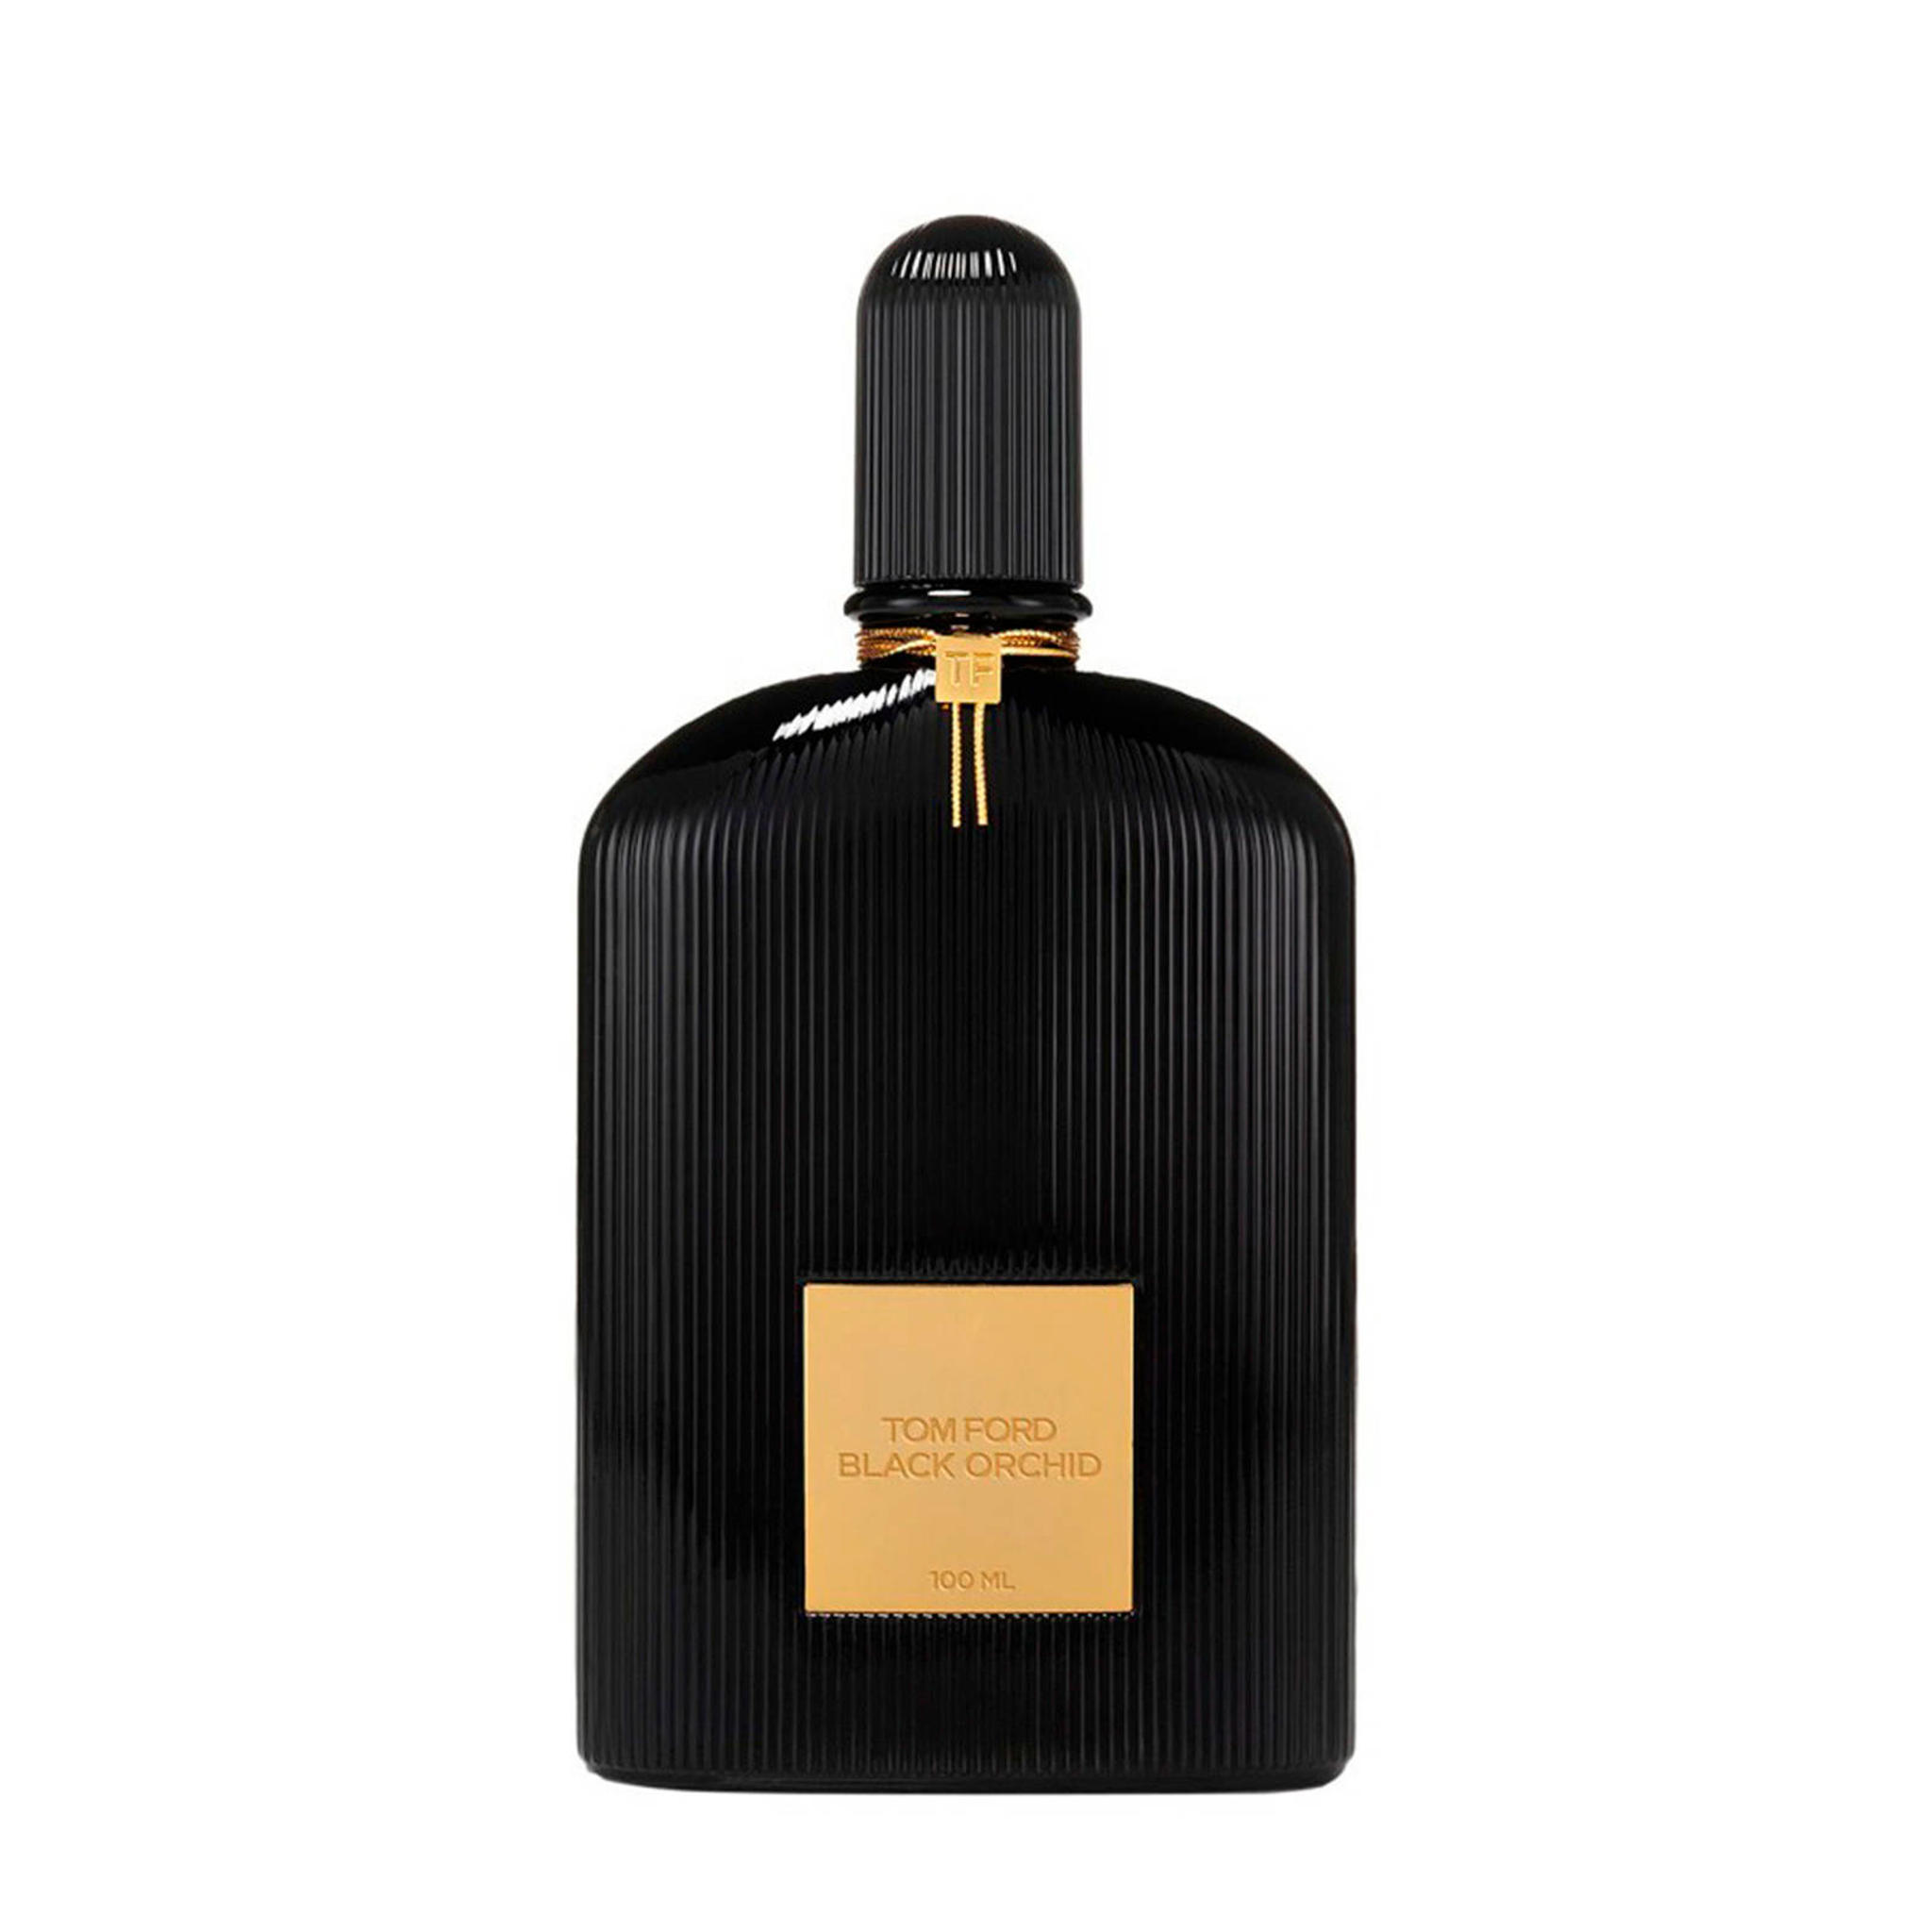 Tom Ford Black Orchid eau de parfum - 100 ml | wehkamp